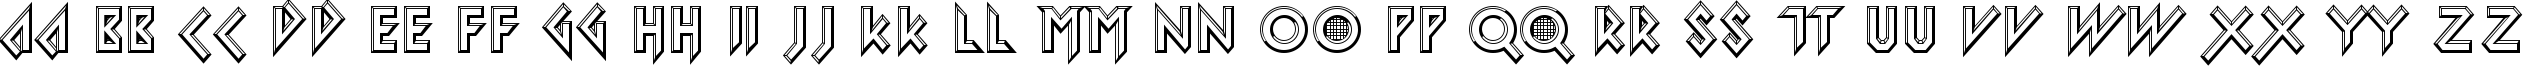 Пример написания английского алфавита шрифтом Iomanoid